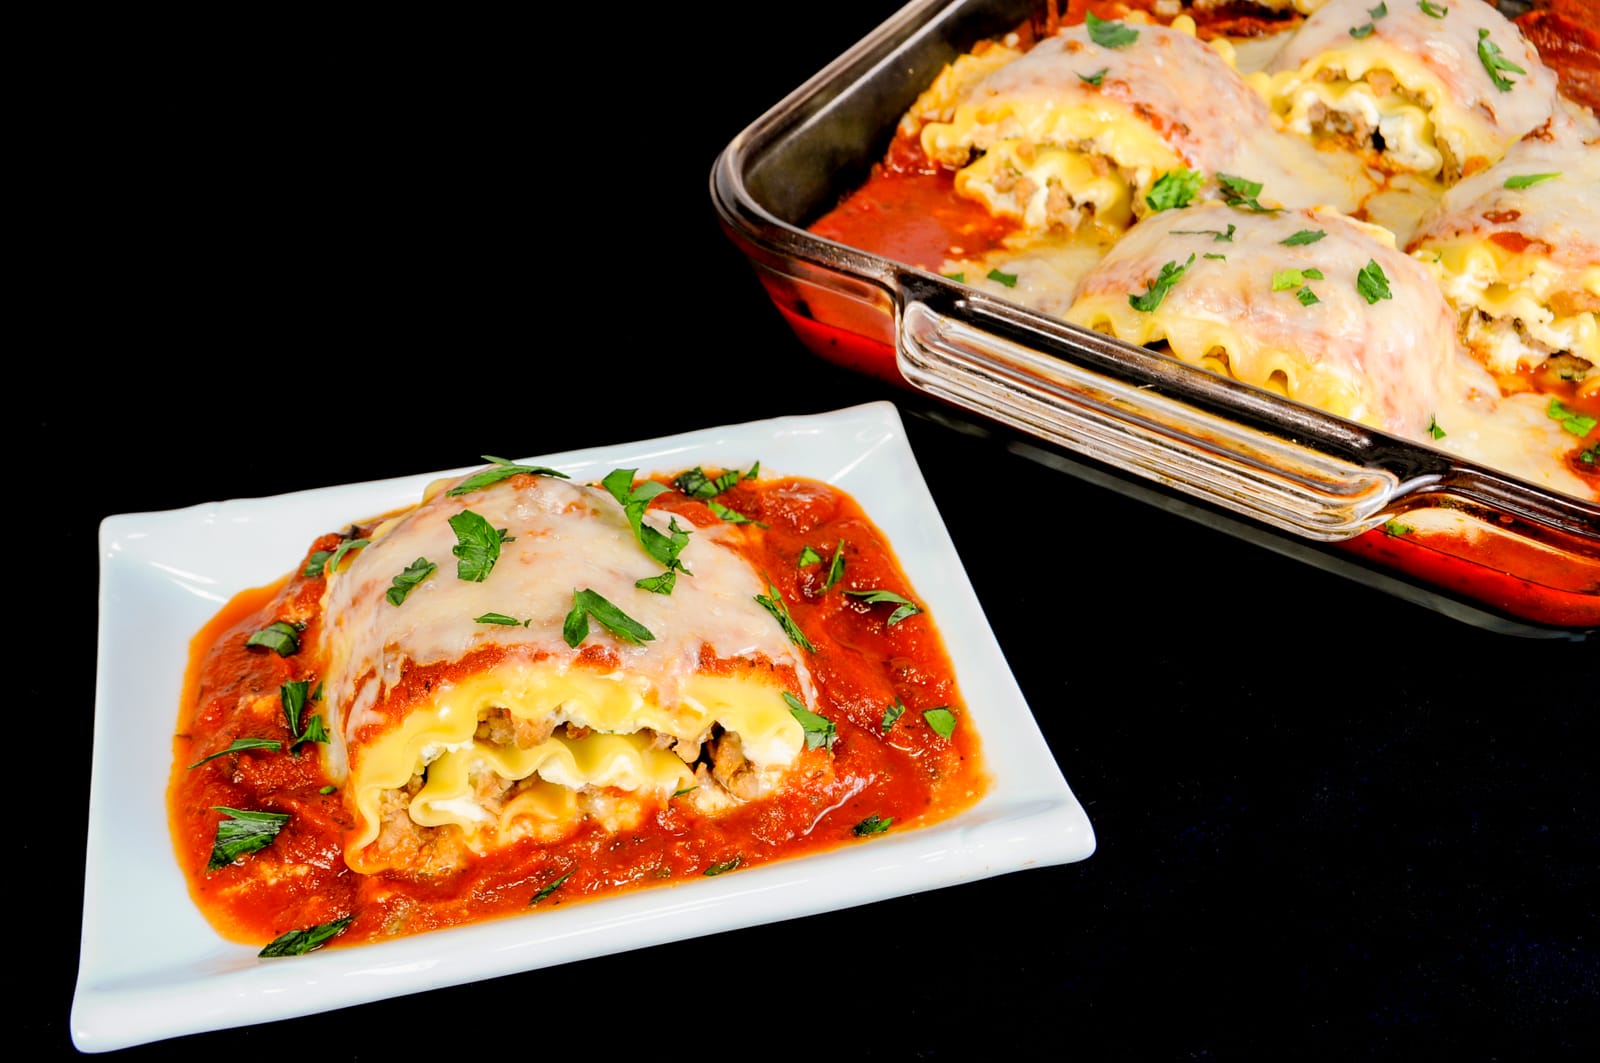 Turkey Italian Sausage and Ricotta Lasagna Roll Ups